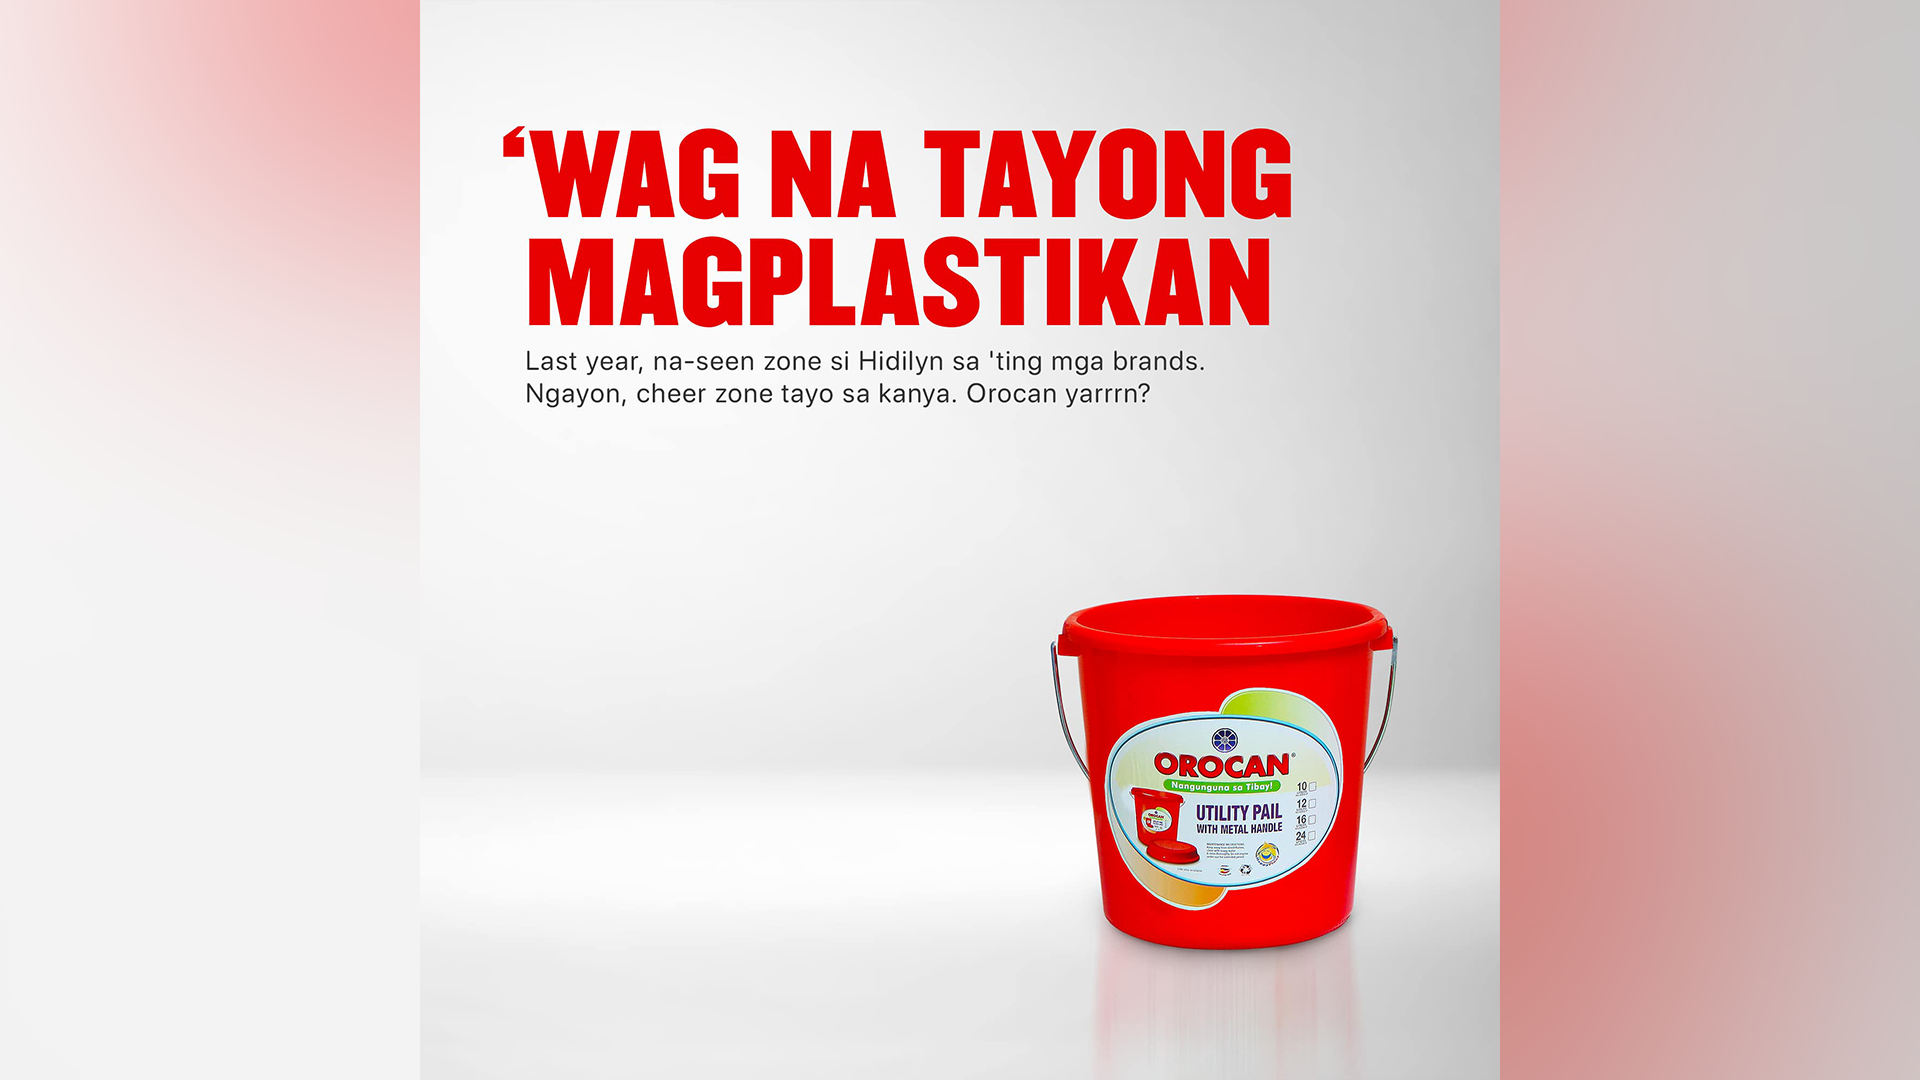 ‘Wag na tayong magplastikan’ - Orocan’s Olympics ad issues a powerful headline, GIGIL explains the reason behind it